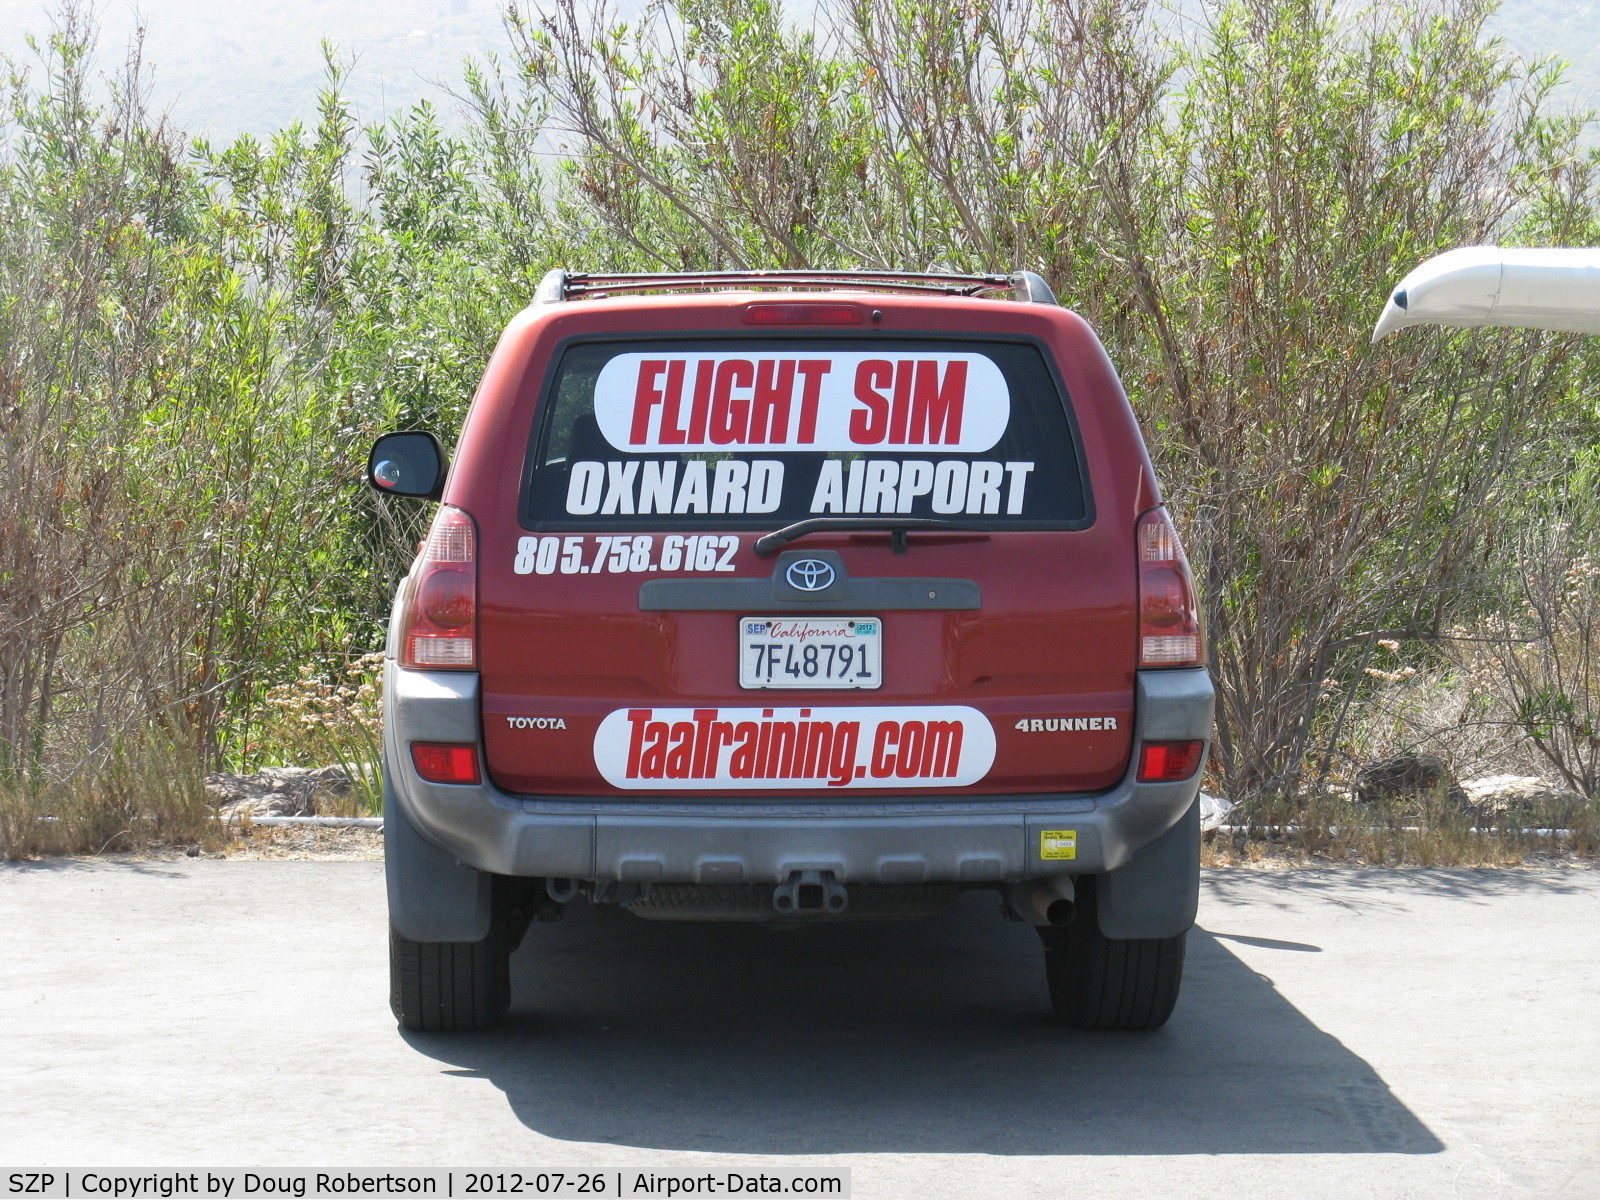 Santa Paula Airport (SZP) - Seen at SZP-Red Bird Flight Simulation Training-advertising vehicle based at OXR.